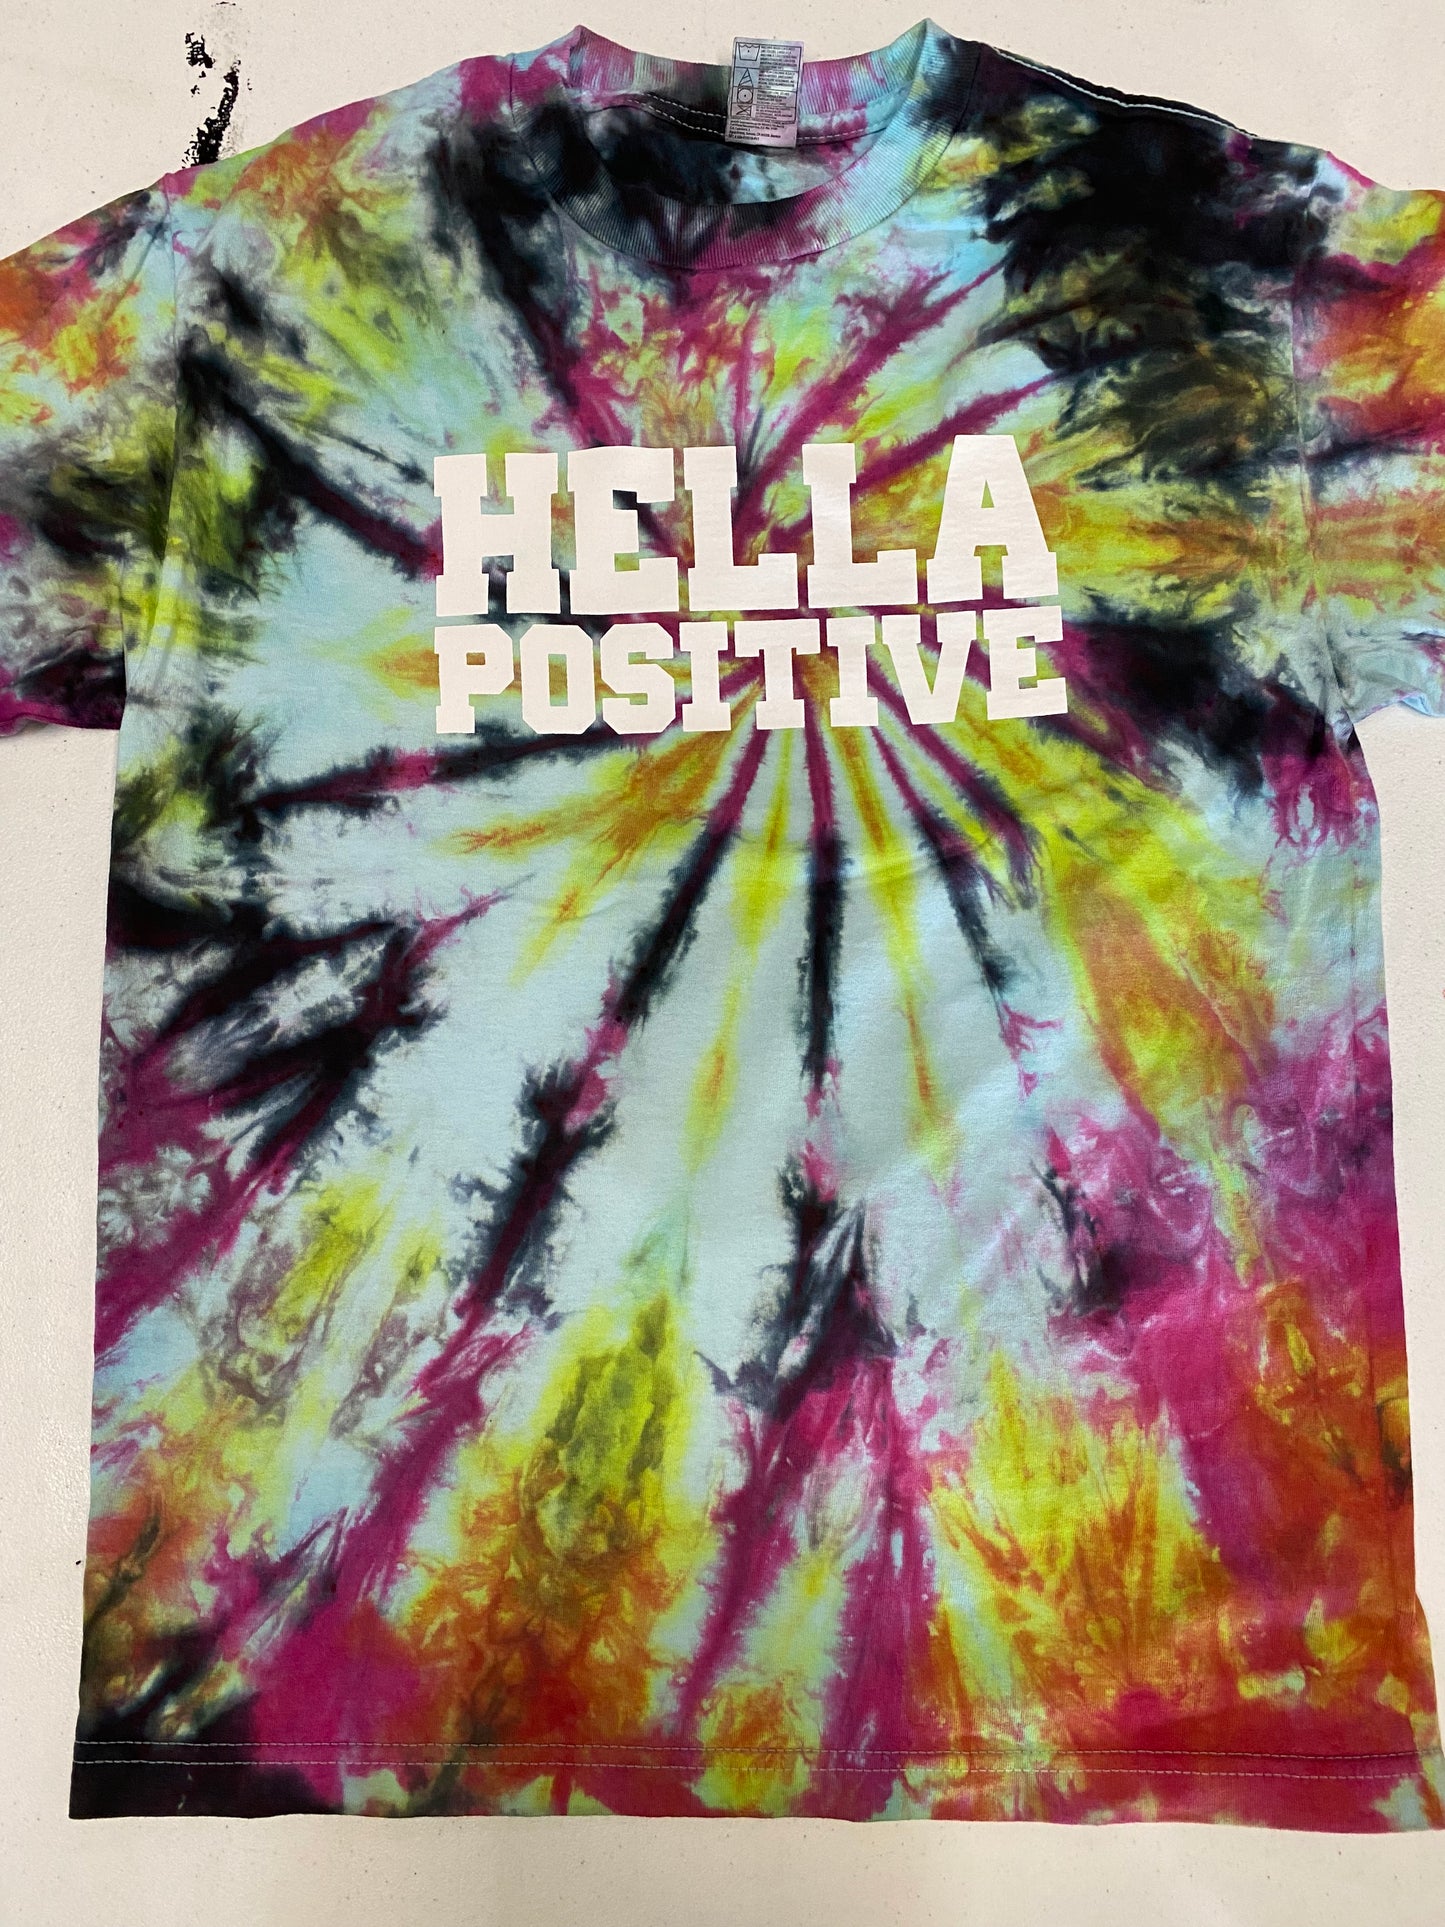 Hella Positive Tie Dye T-Shirt - Medium